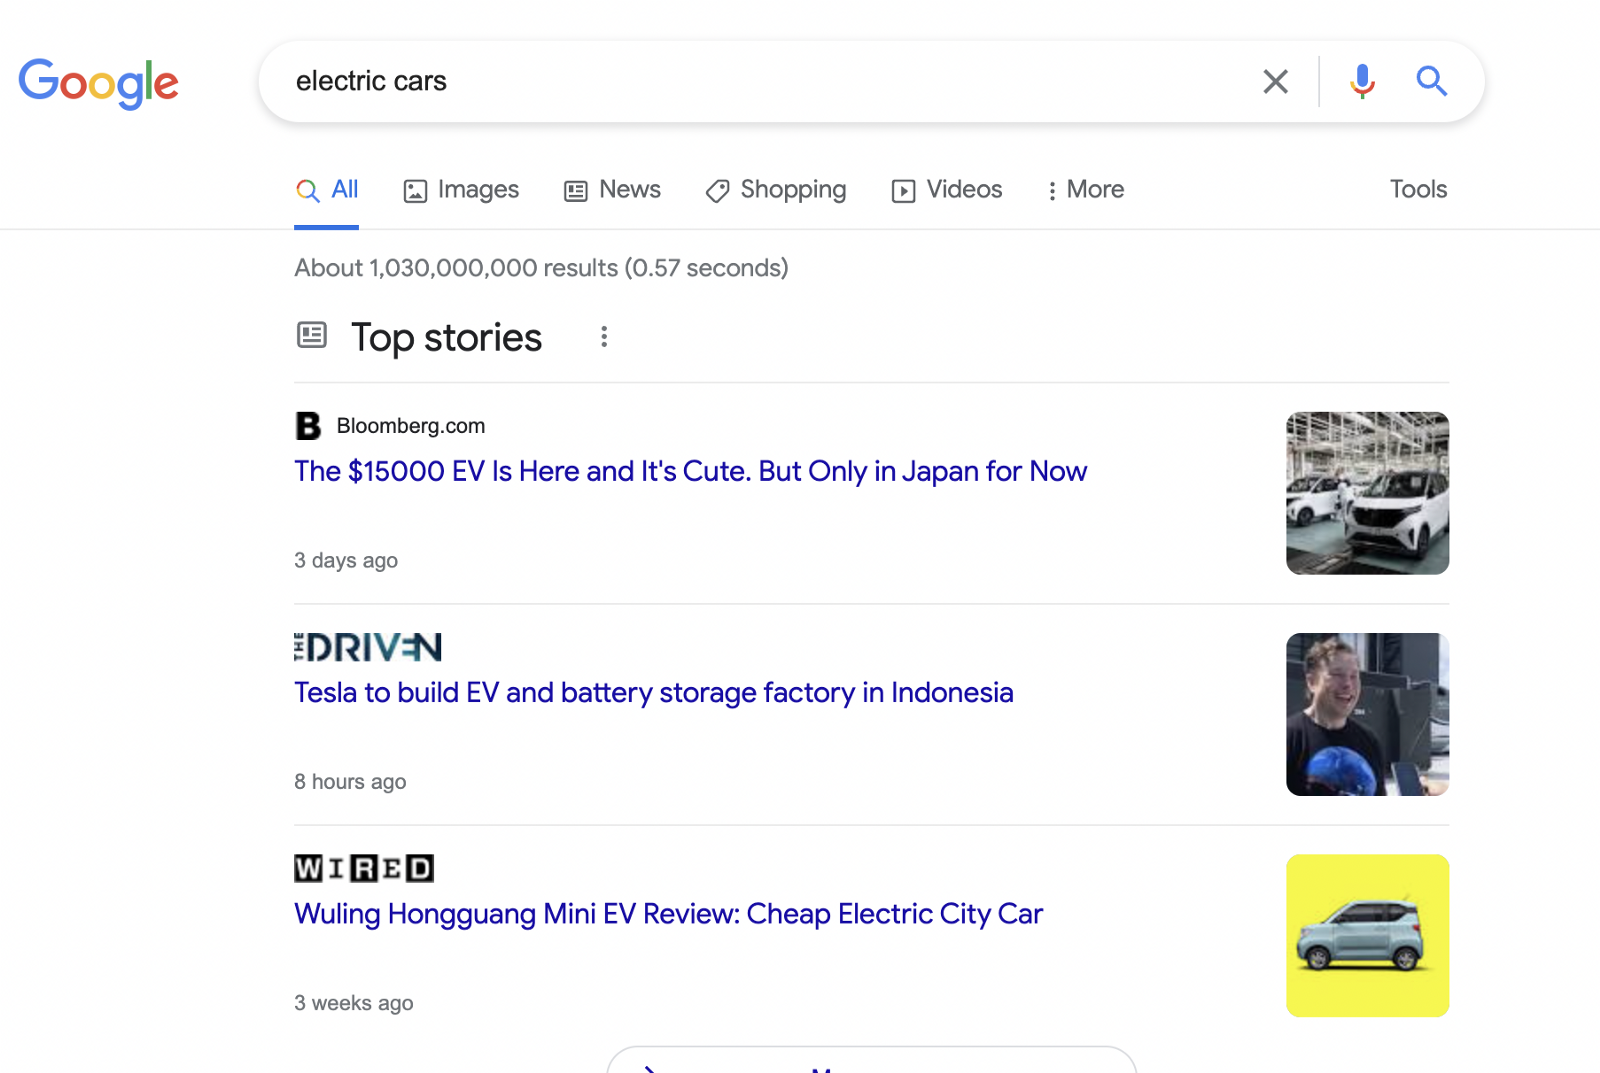 Search "electric car"